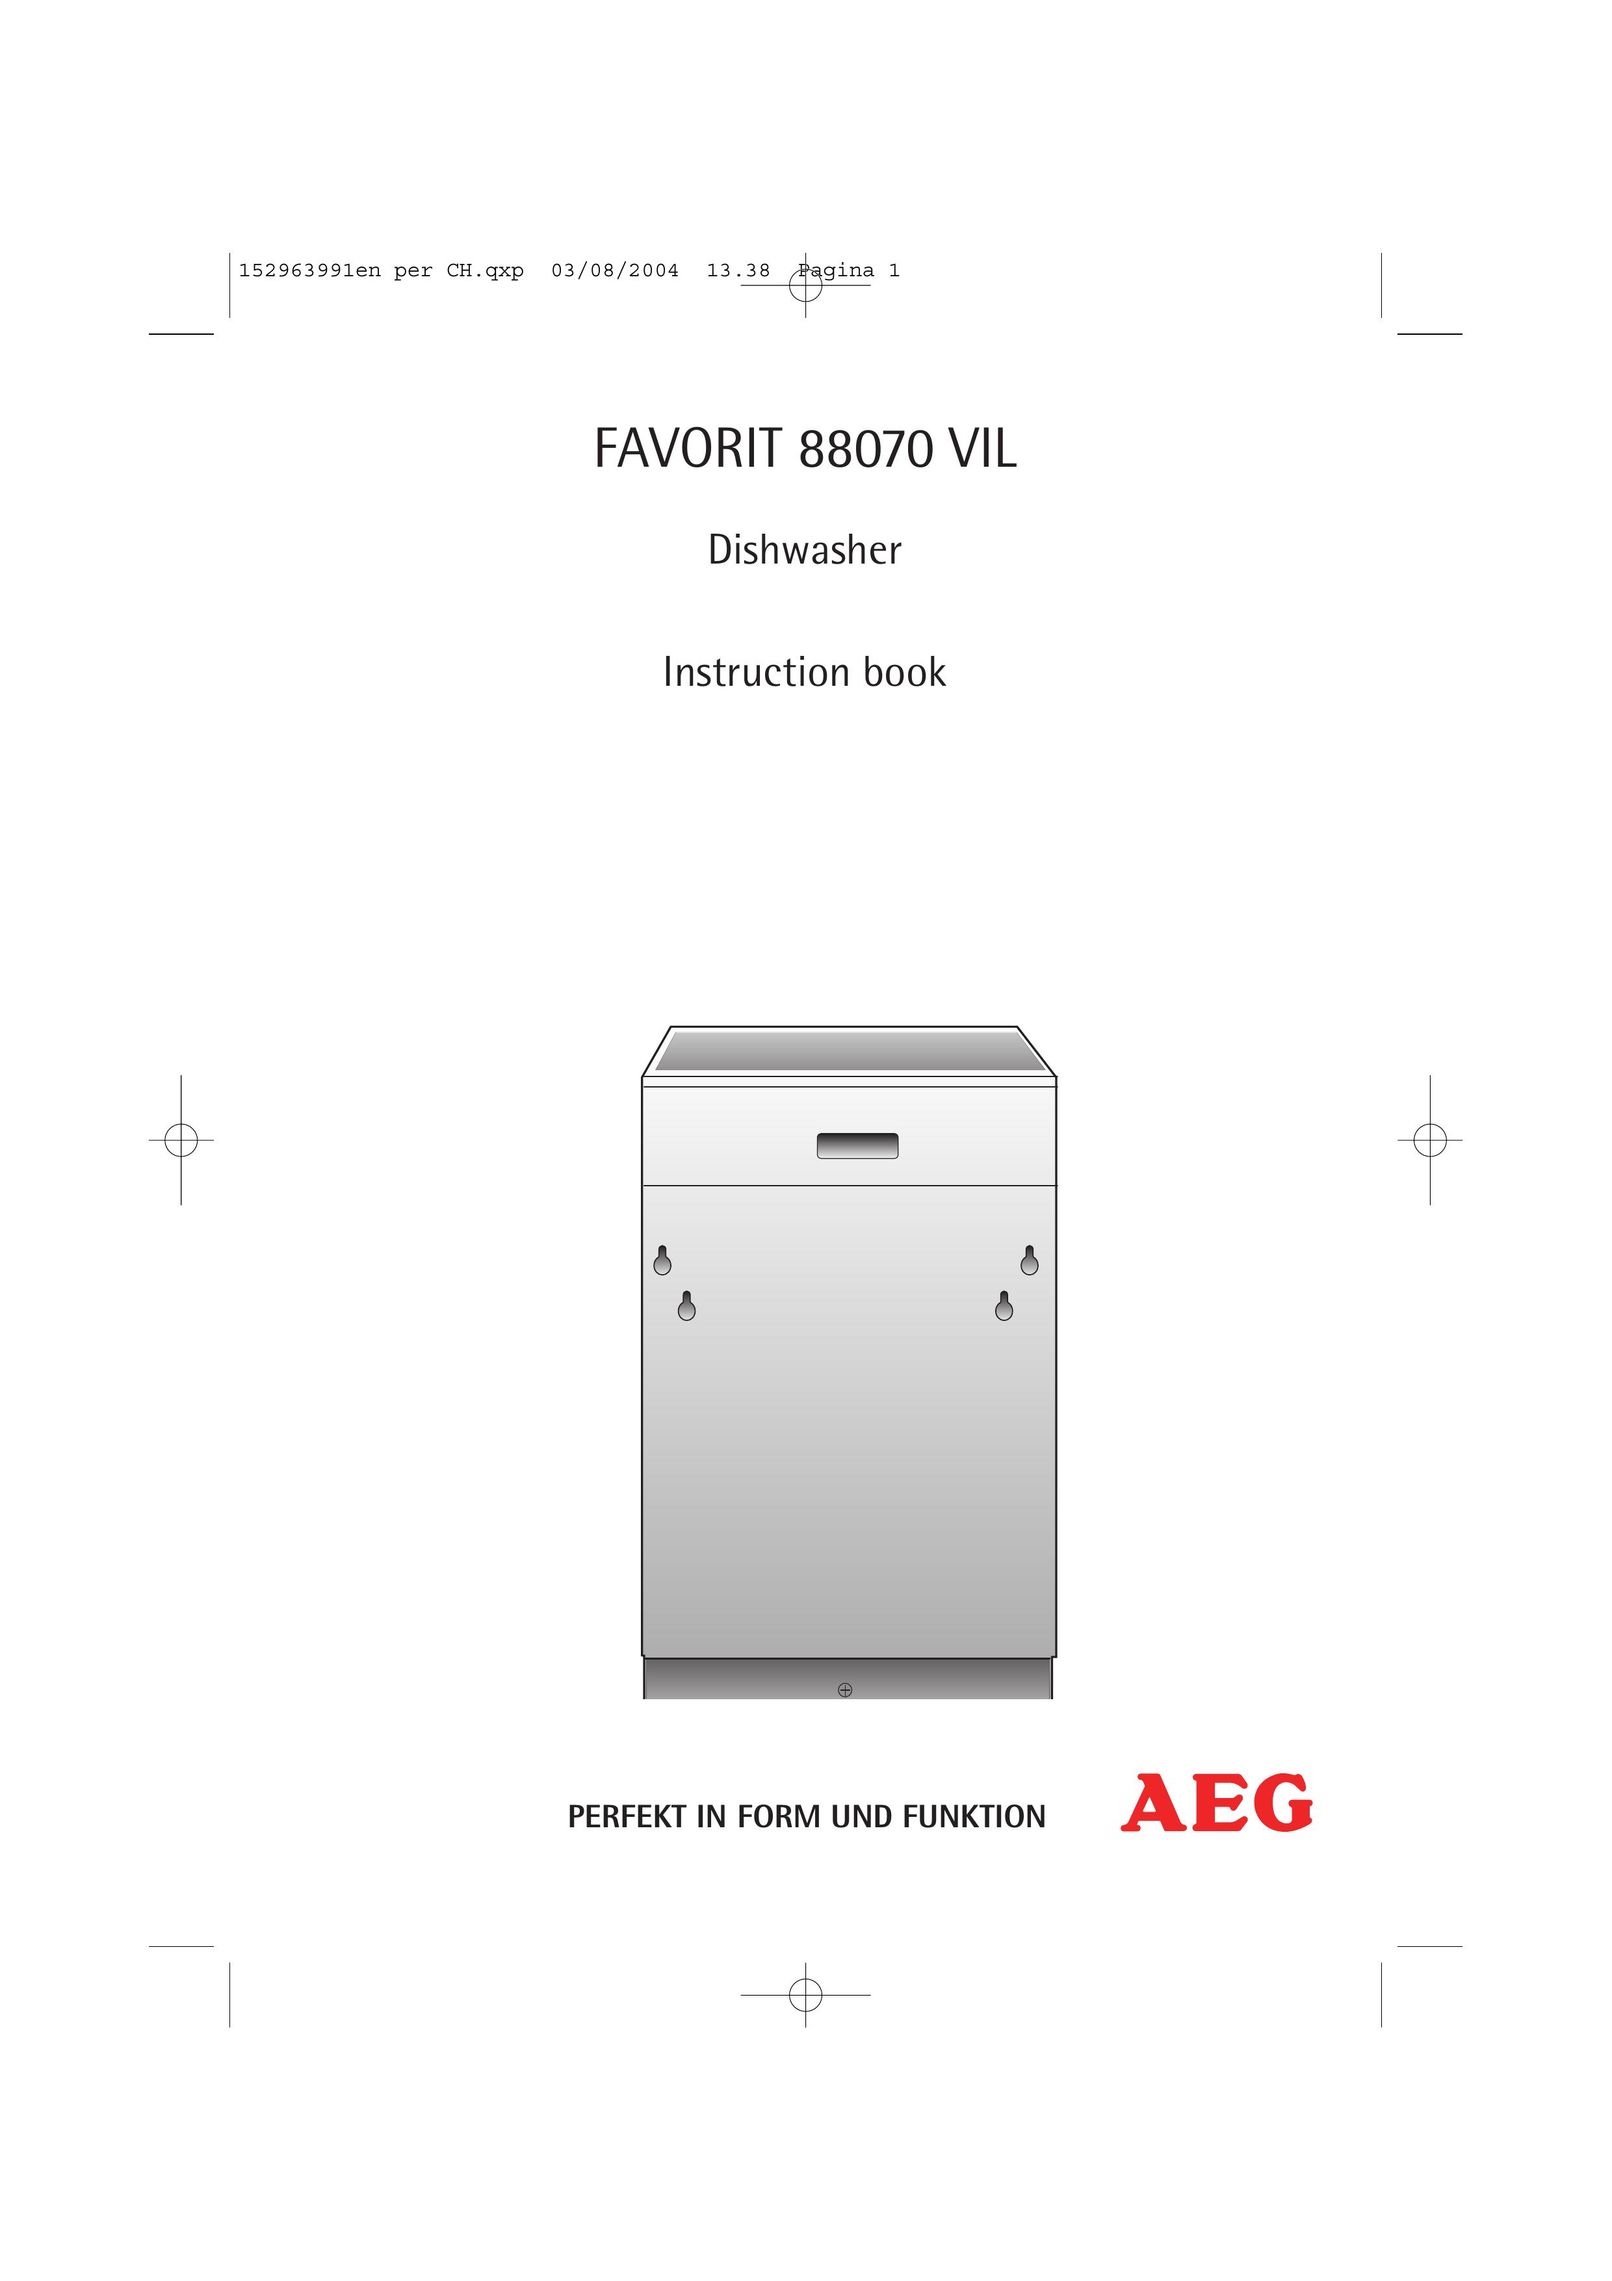 AEG 88070 Dishwasher User Manual